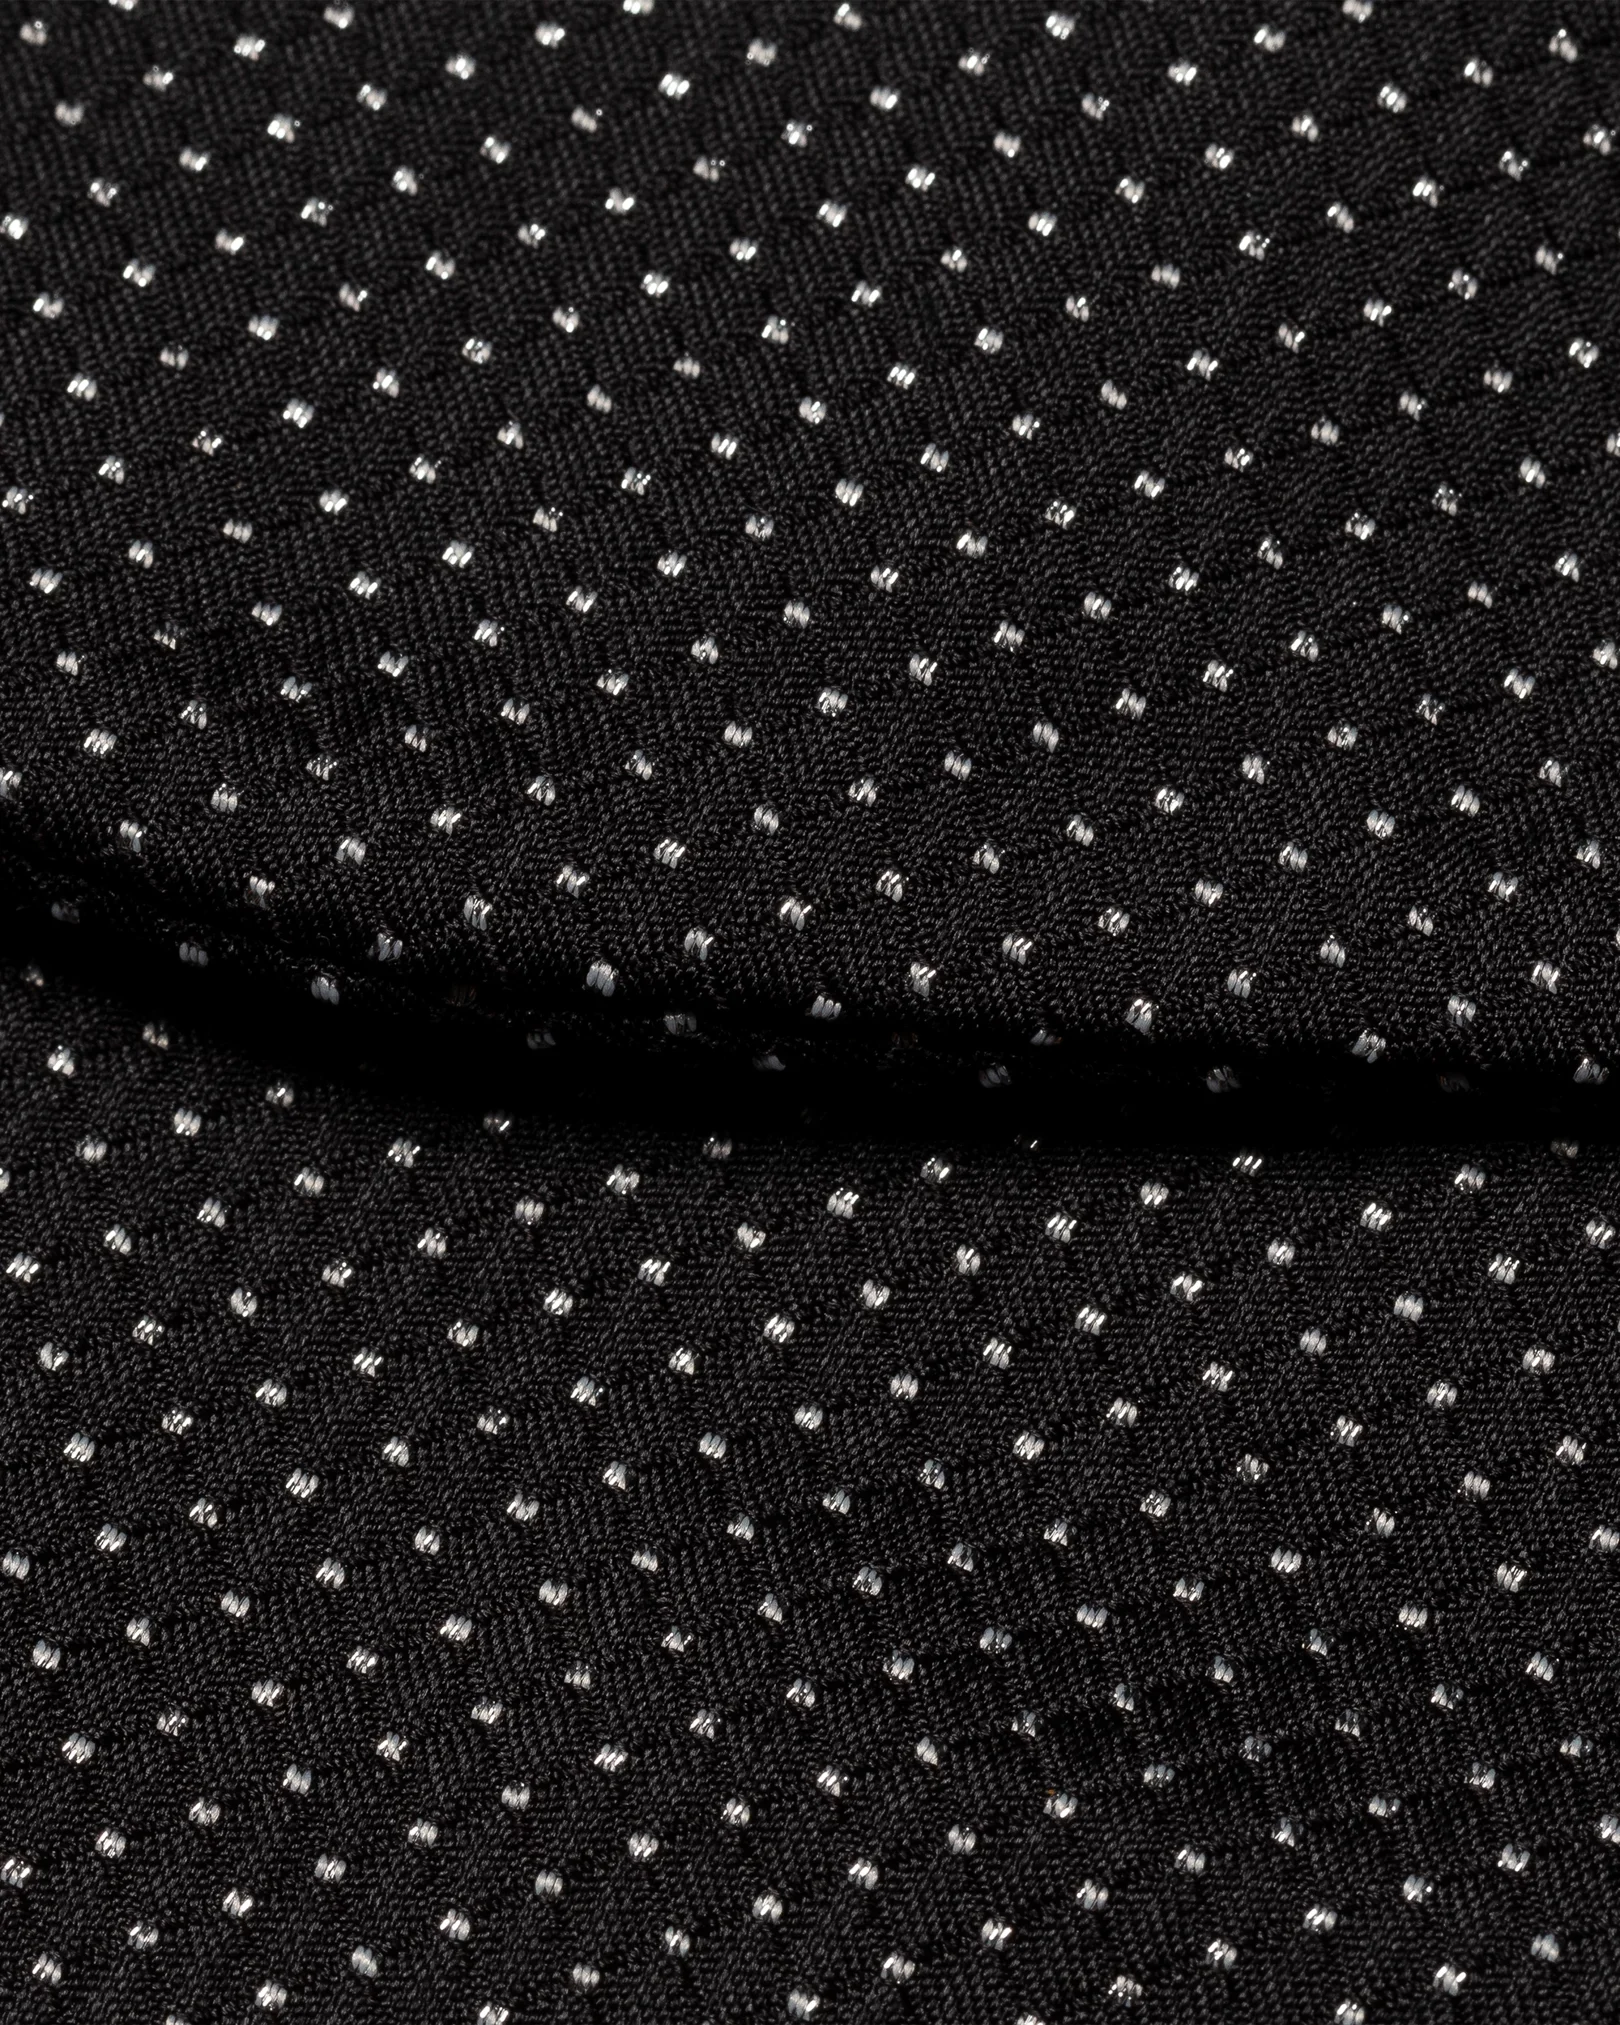 Eton - black evening bow tie